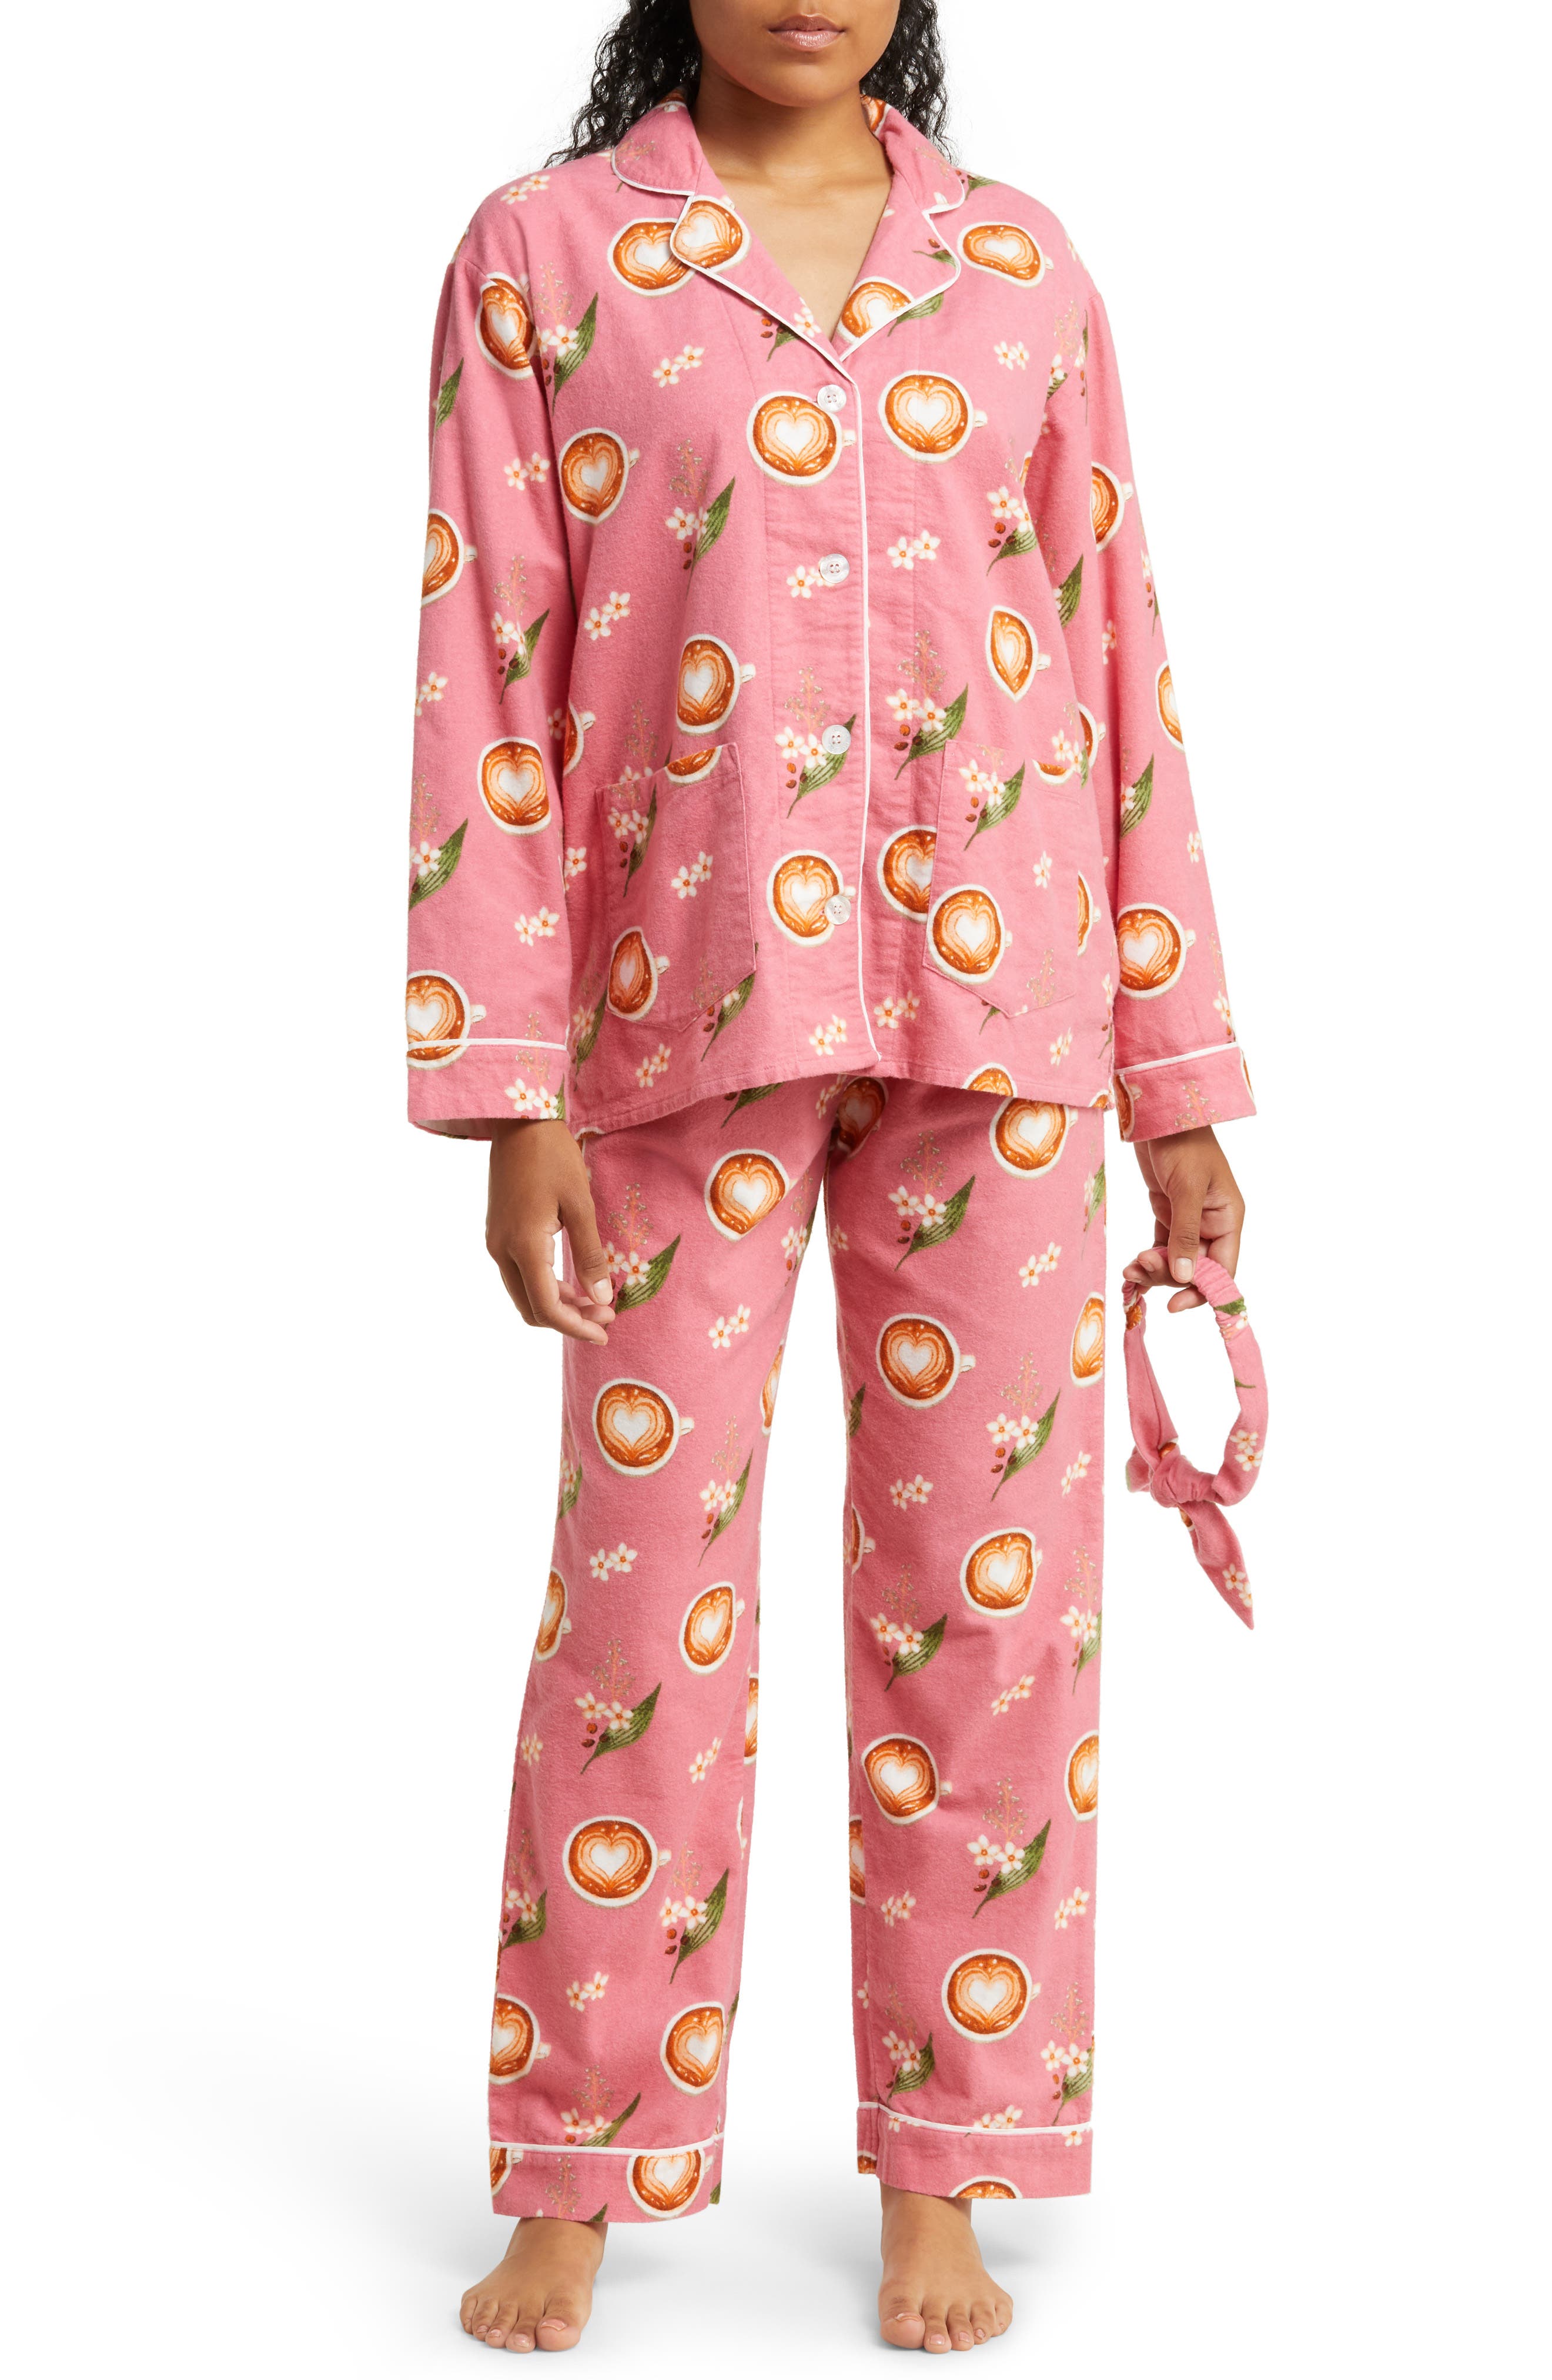 Six the Musical Pyjama set Clothing Gender-Neutral Adult Clothing Pyjamas & Robes Pyjamas 